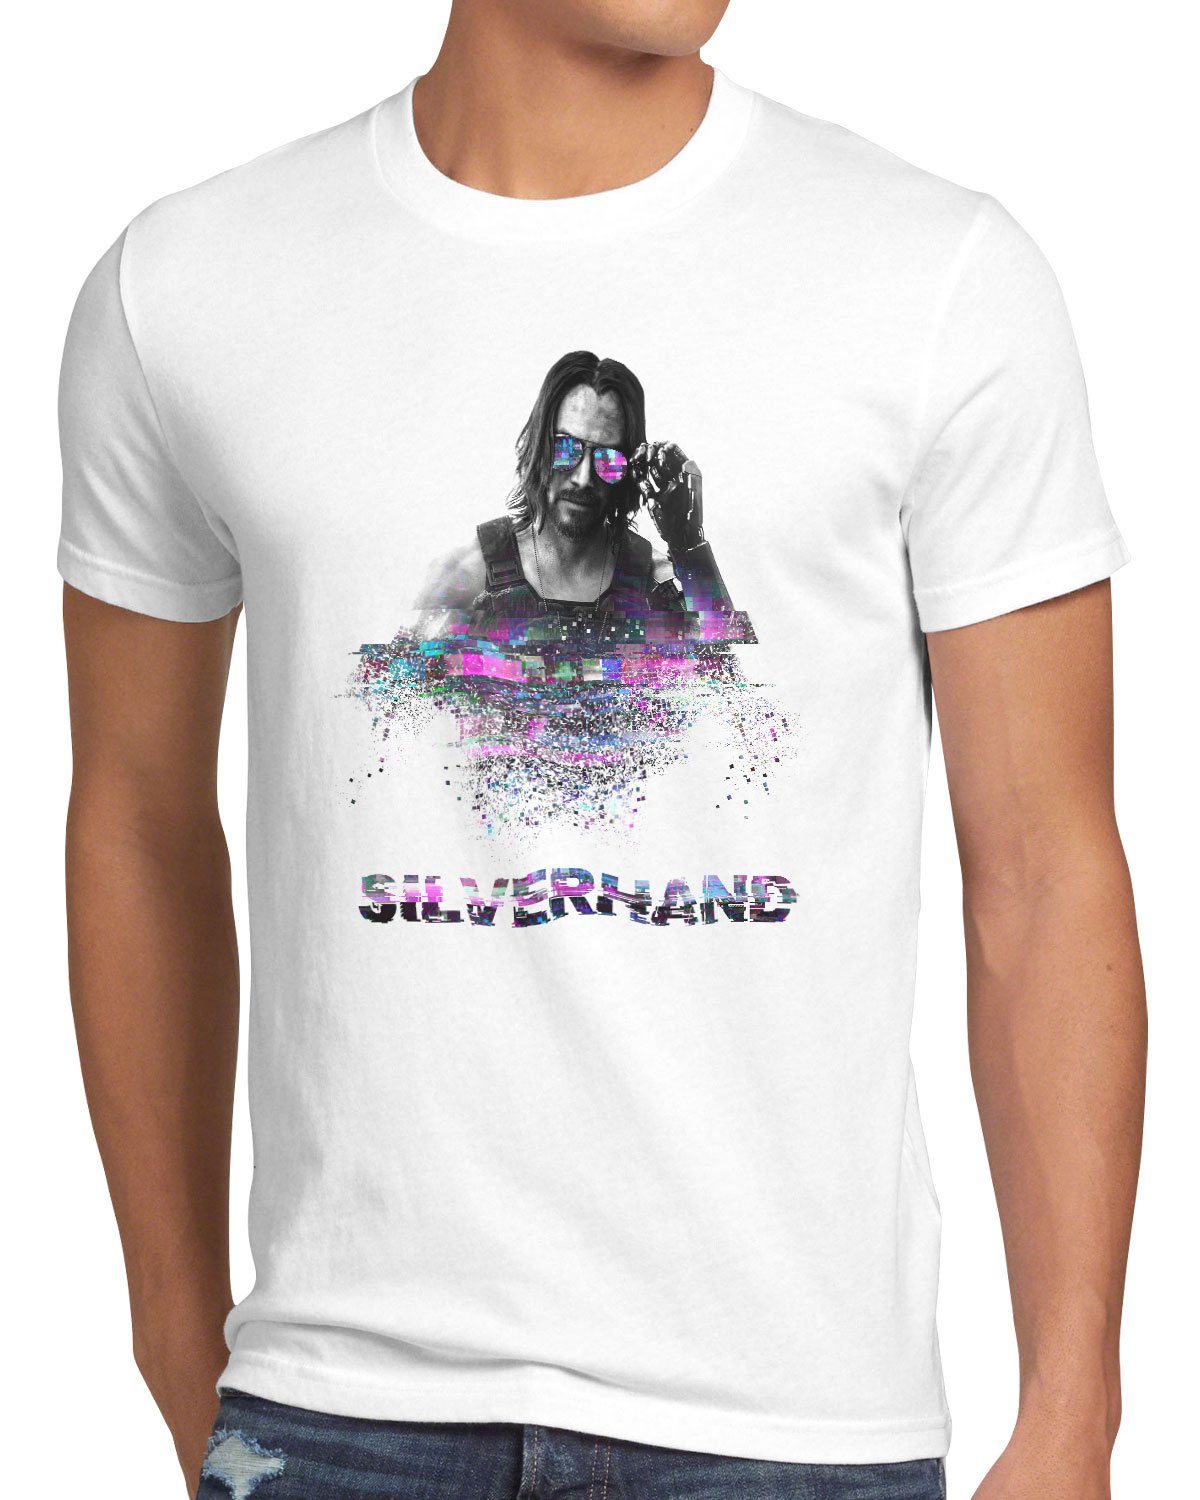 samurai cyberpunk Herren Glitch style3 band Silverhand T-Shirt Print-Shirt